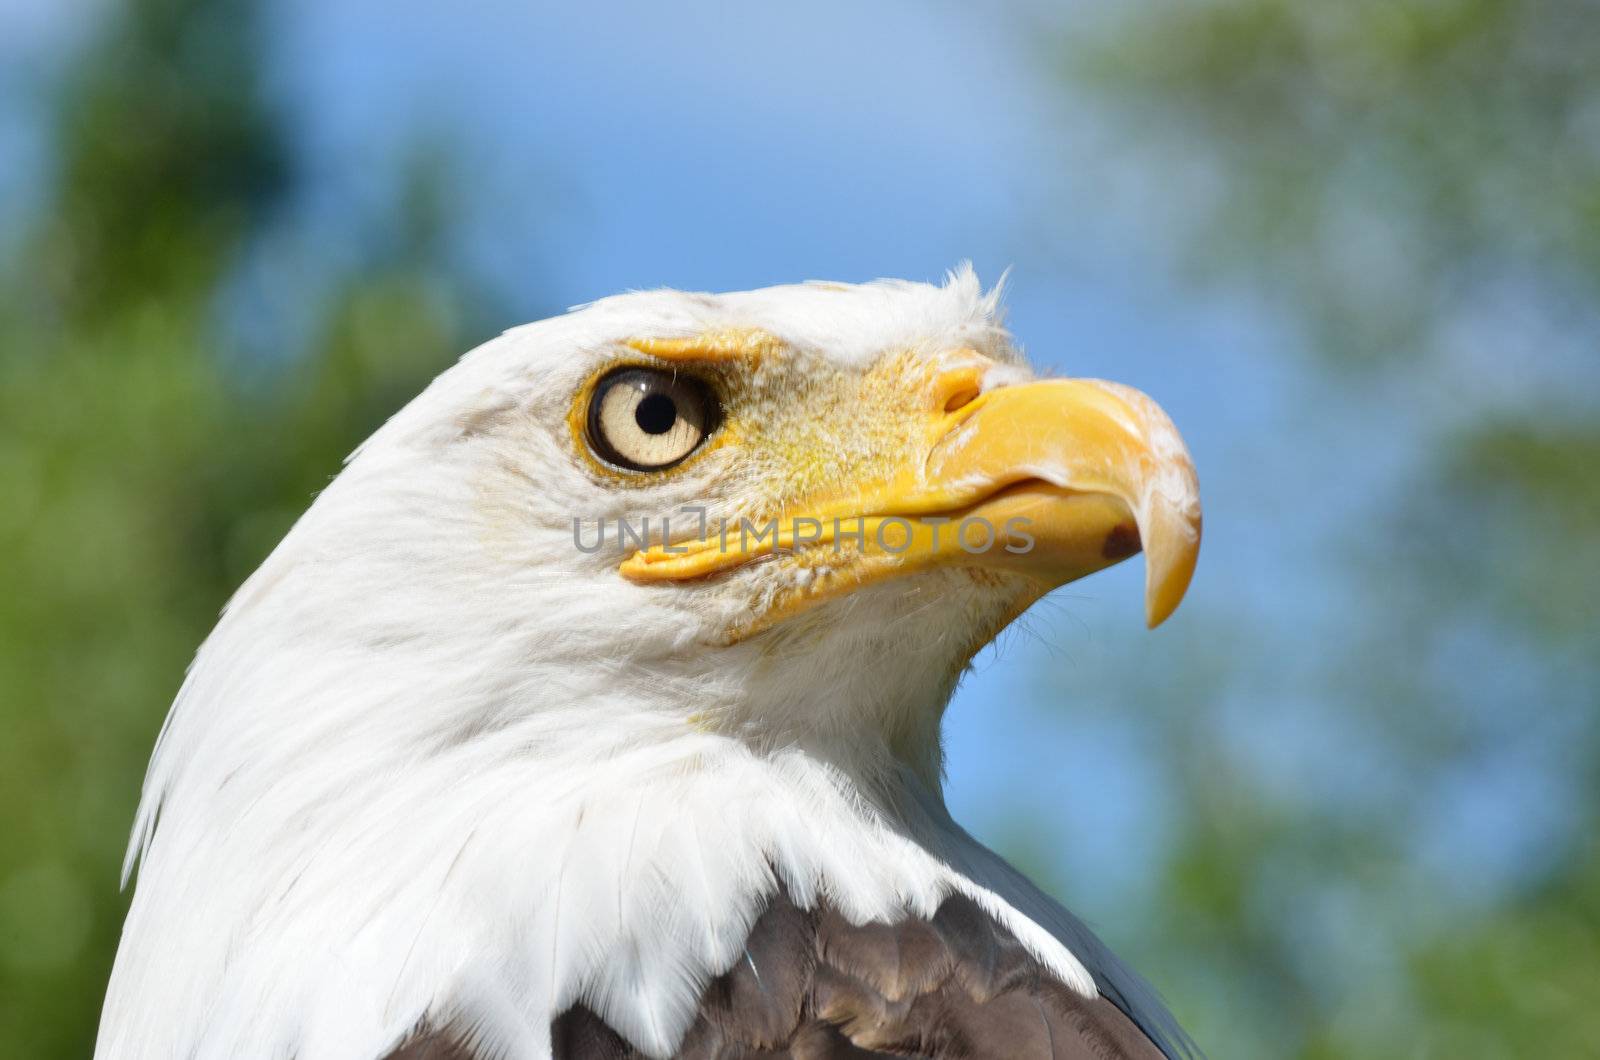 head of american bald eagle